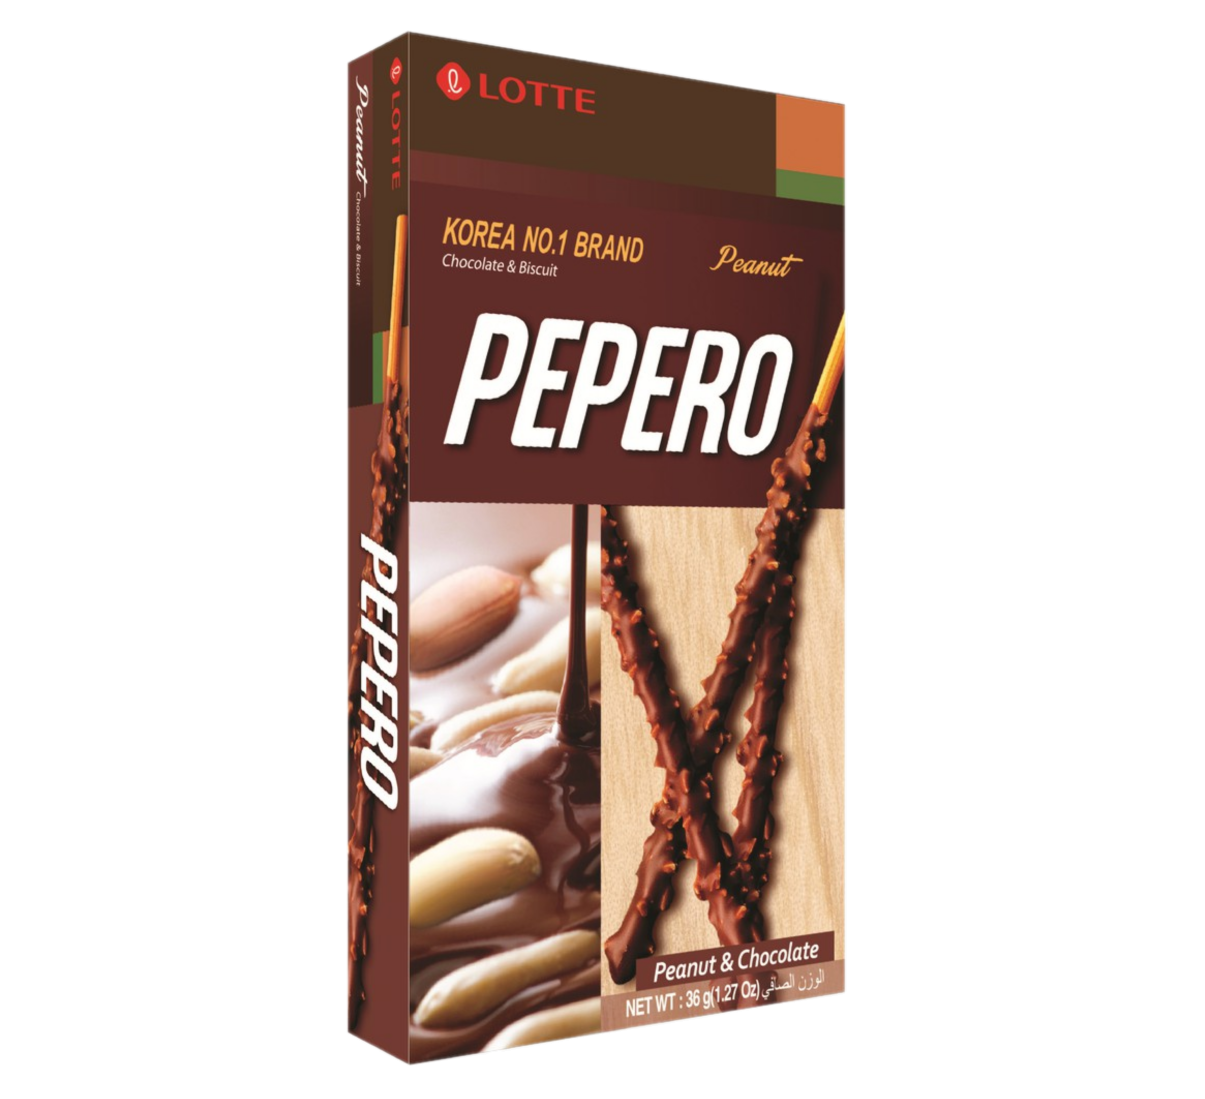 Lotte Pepero peanut & chocolate stick